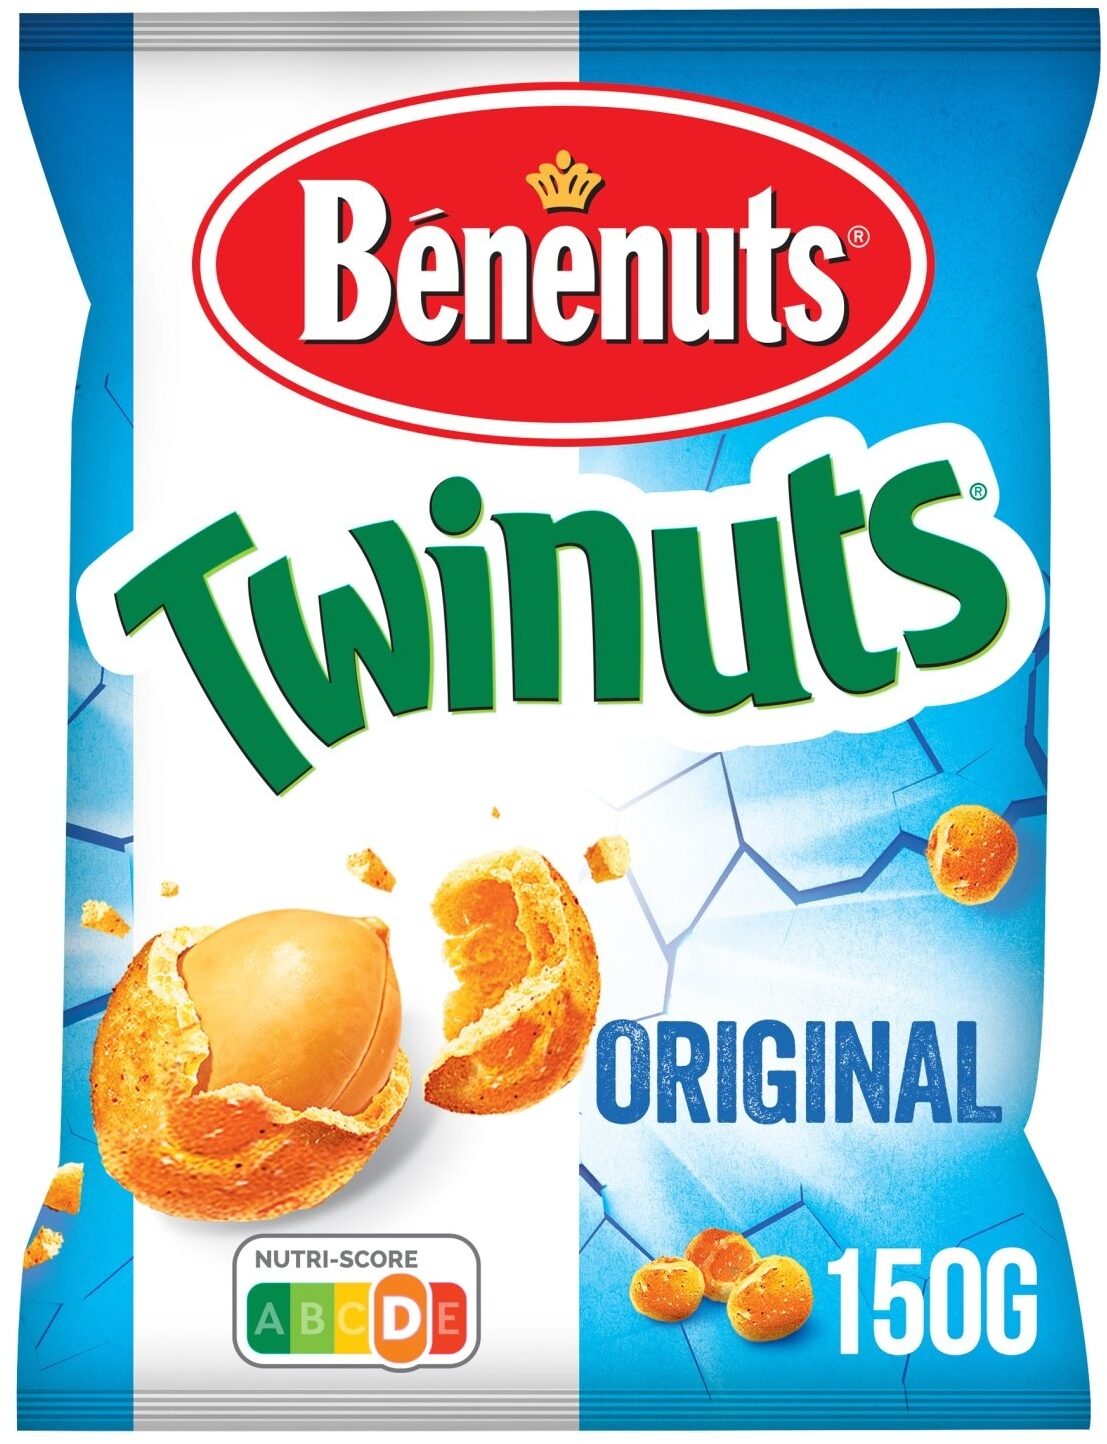 Bénénuts Twinuts original - Product - fr